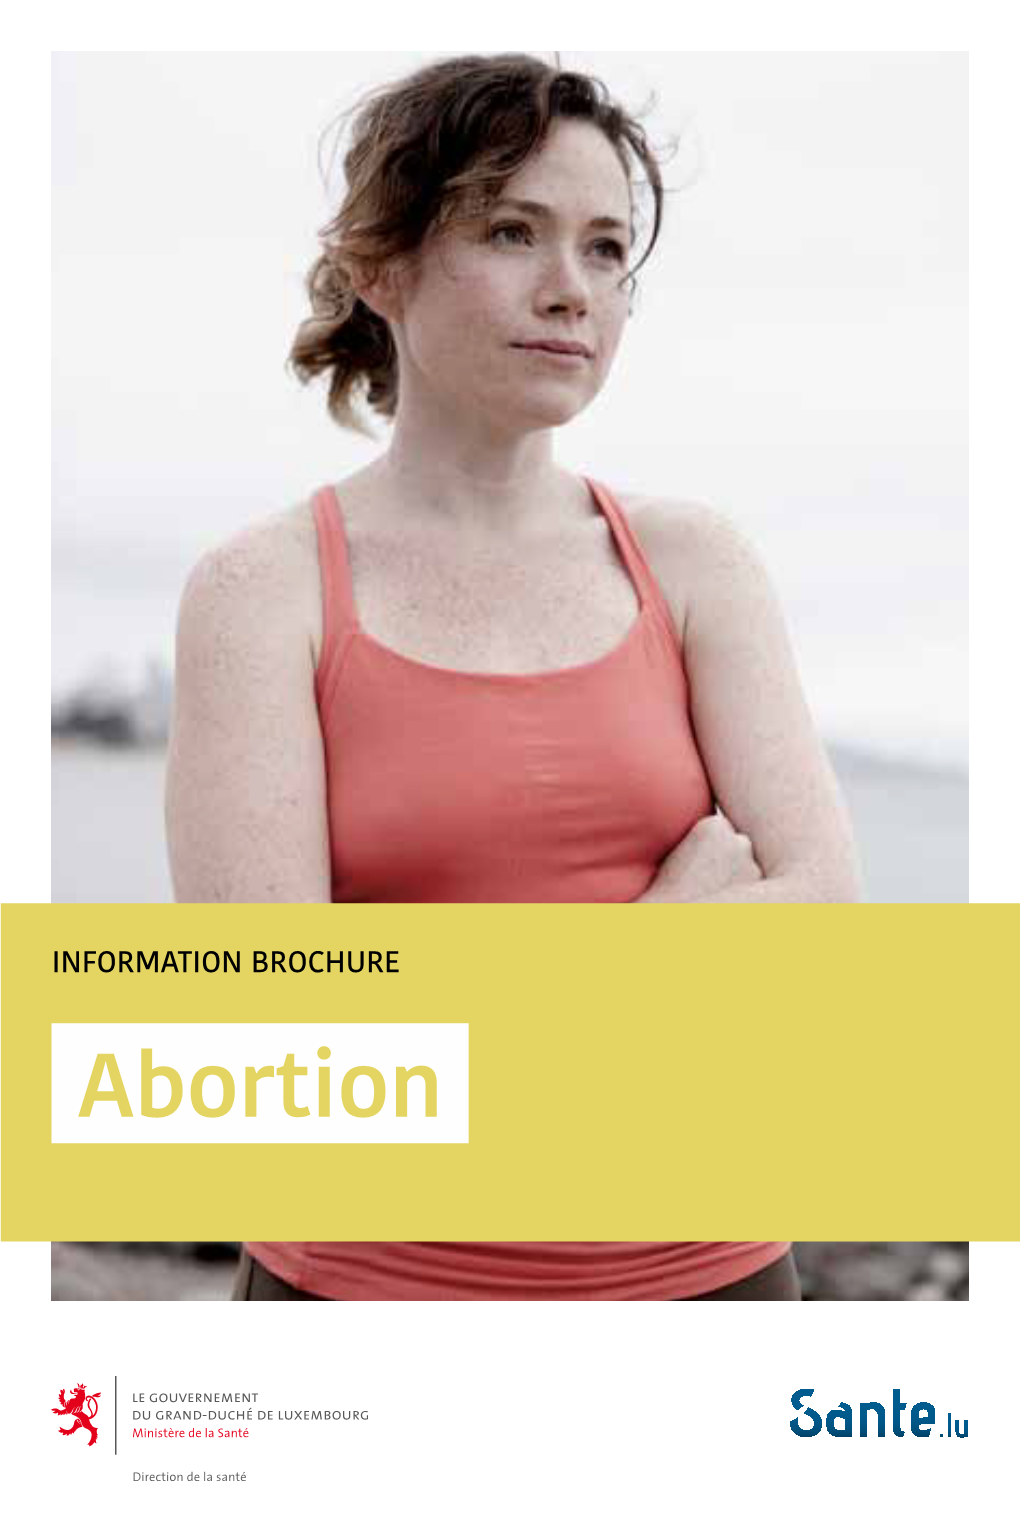 Abortion INFORMATION BROCHURE - ABORTION